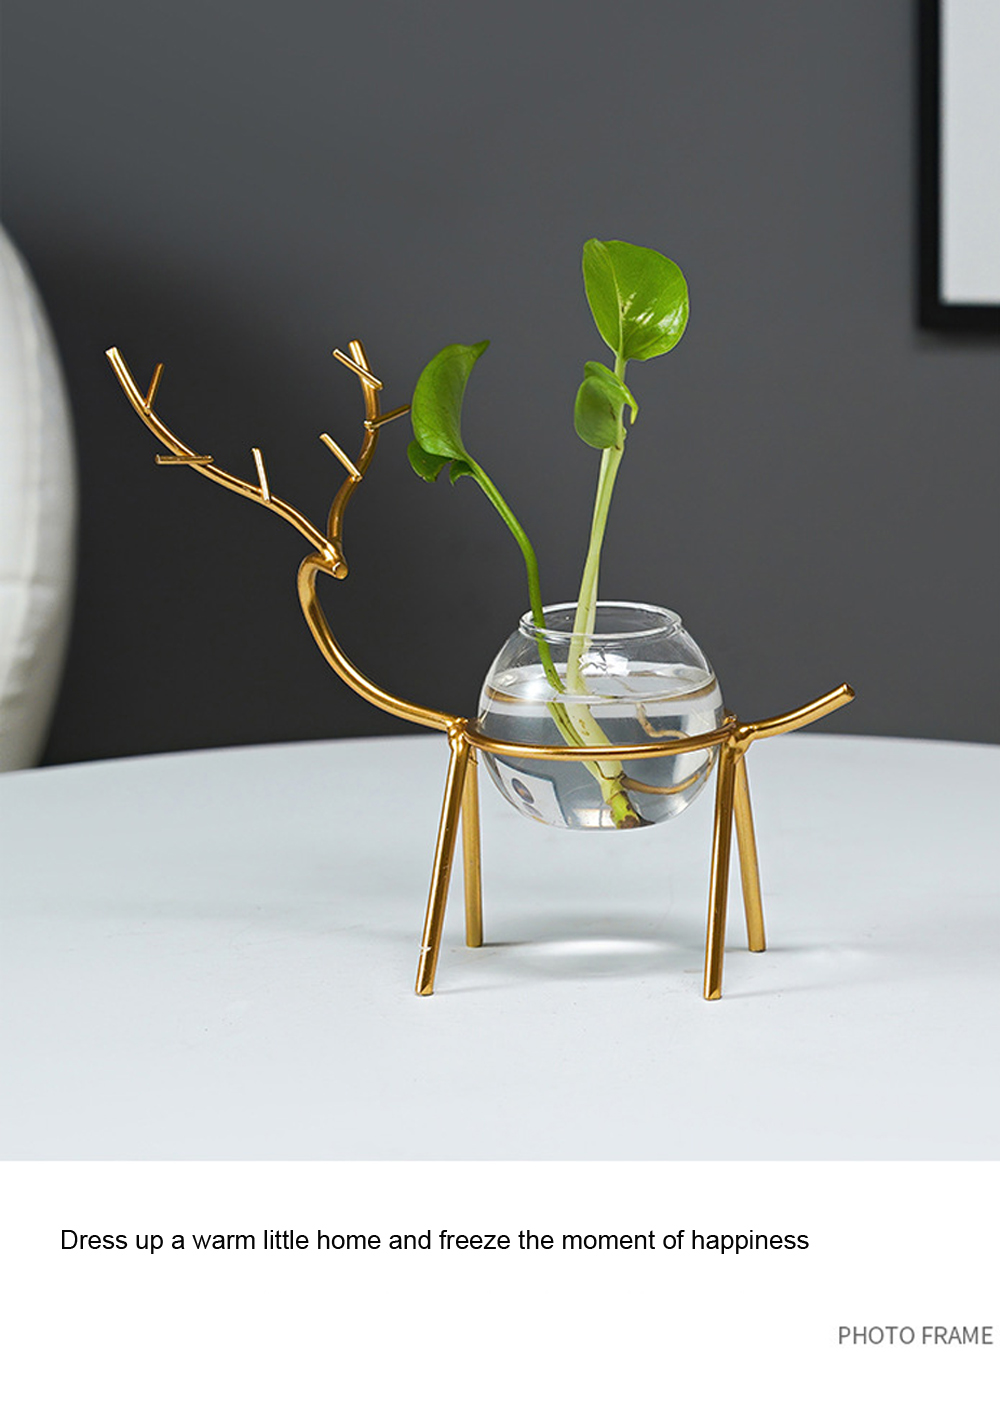 Desktop-Hydroponic-Vase-Flowerpot-Decoration-Fresh-Desktop-Small-Fish-Tank-Office-Desk-Living-Room-C-1744594-6